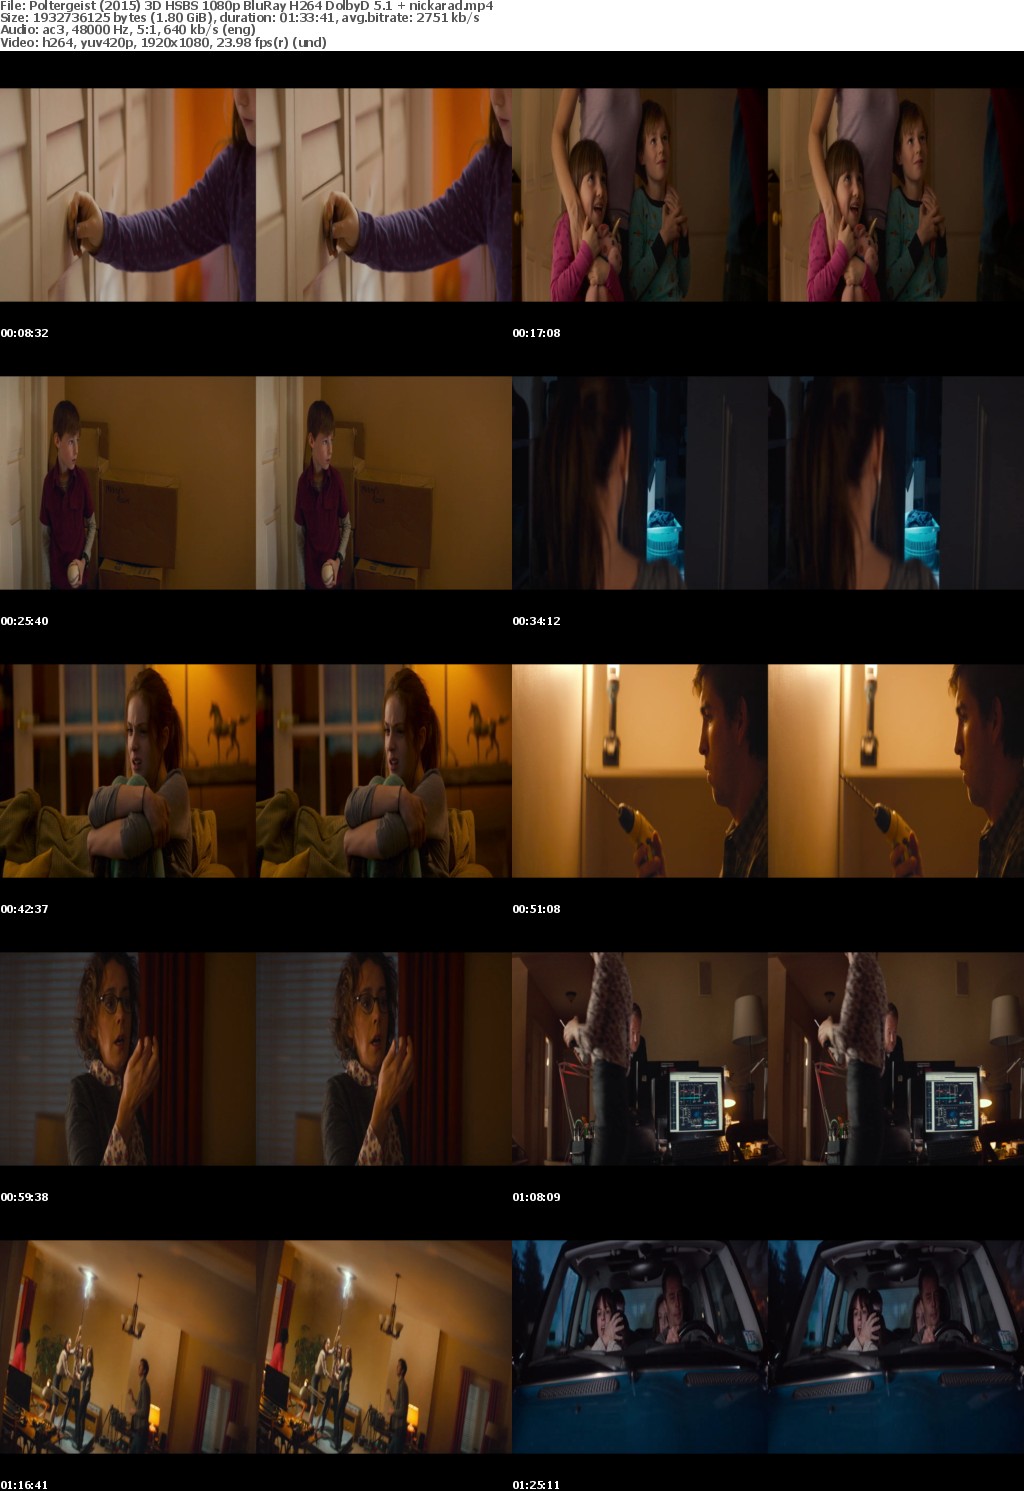 Poltergeist (2015) 3D HSBS 1080p BluRay H264 DolbyD 5 1 nickarad